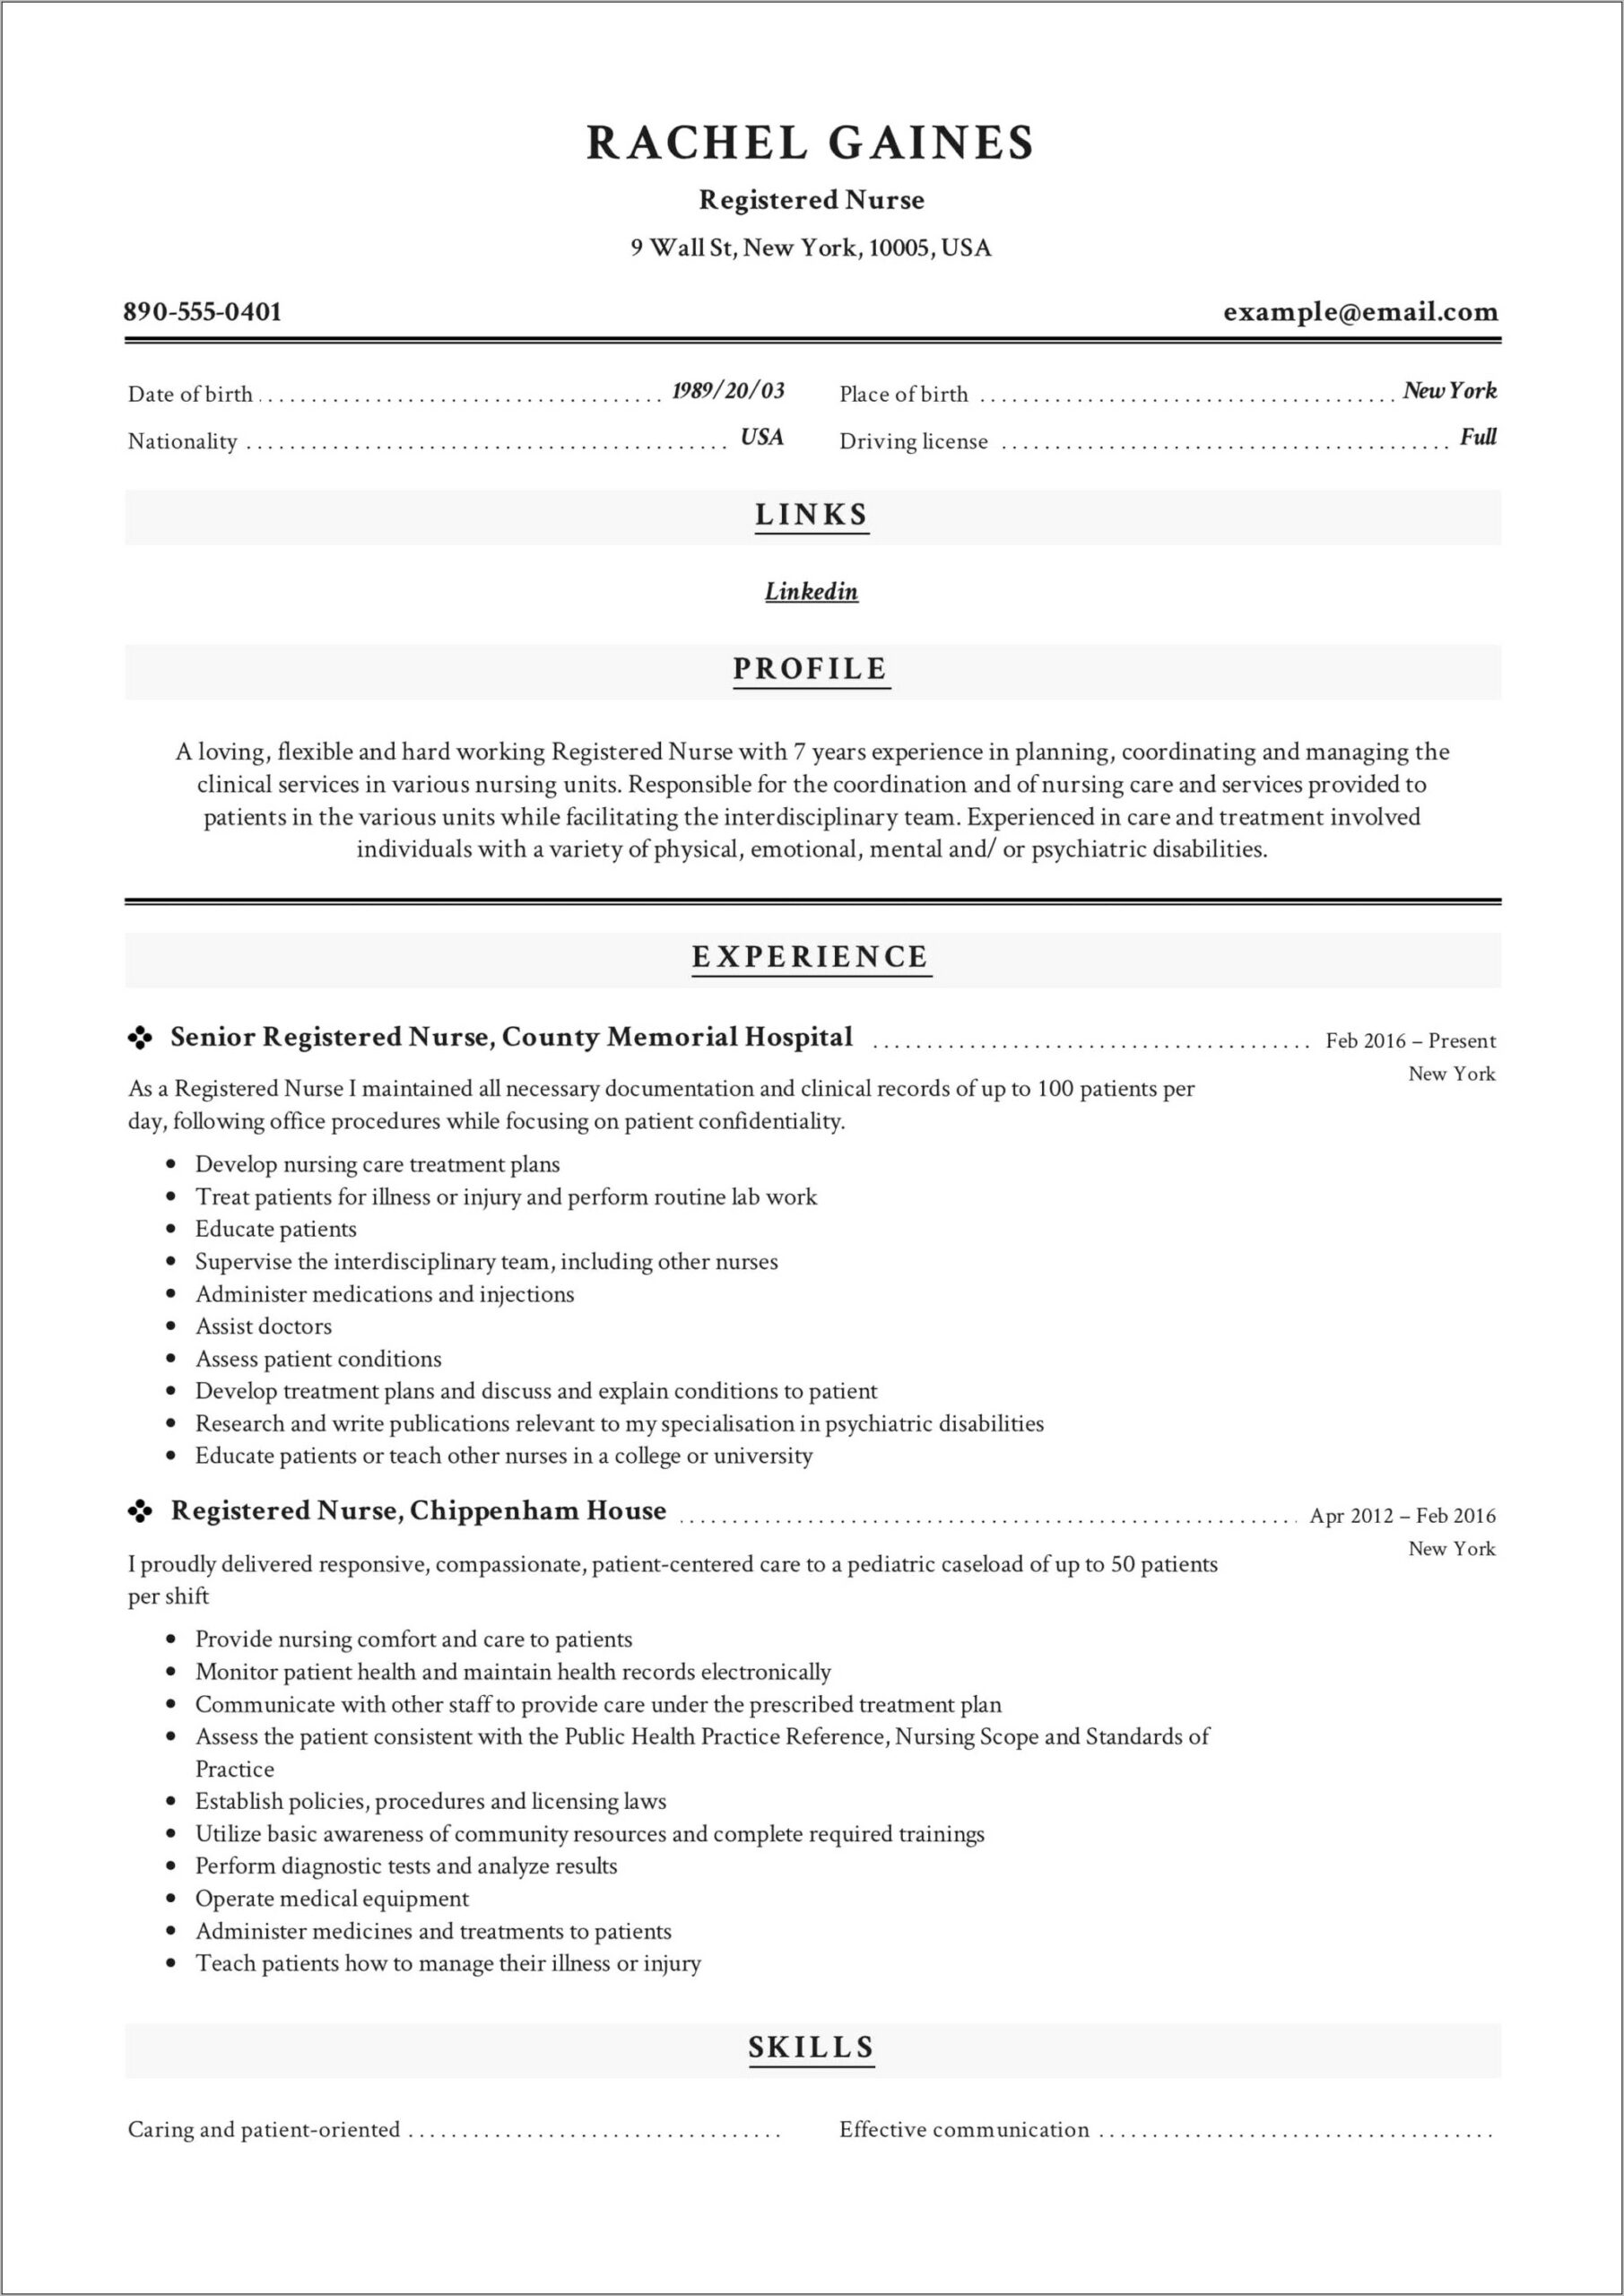 Examples Of Nursing Professional Resume